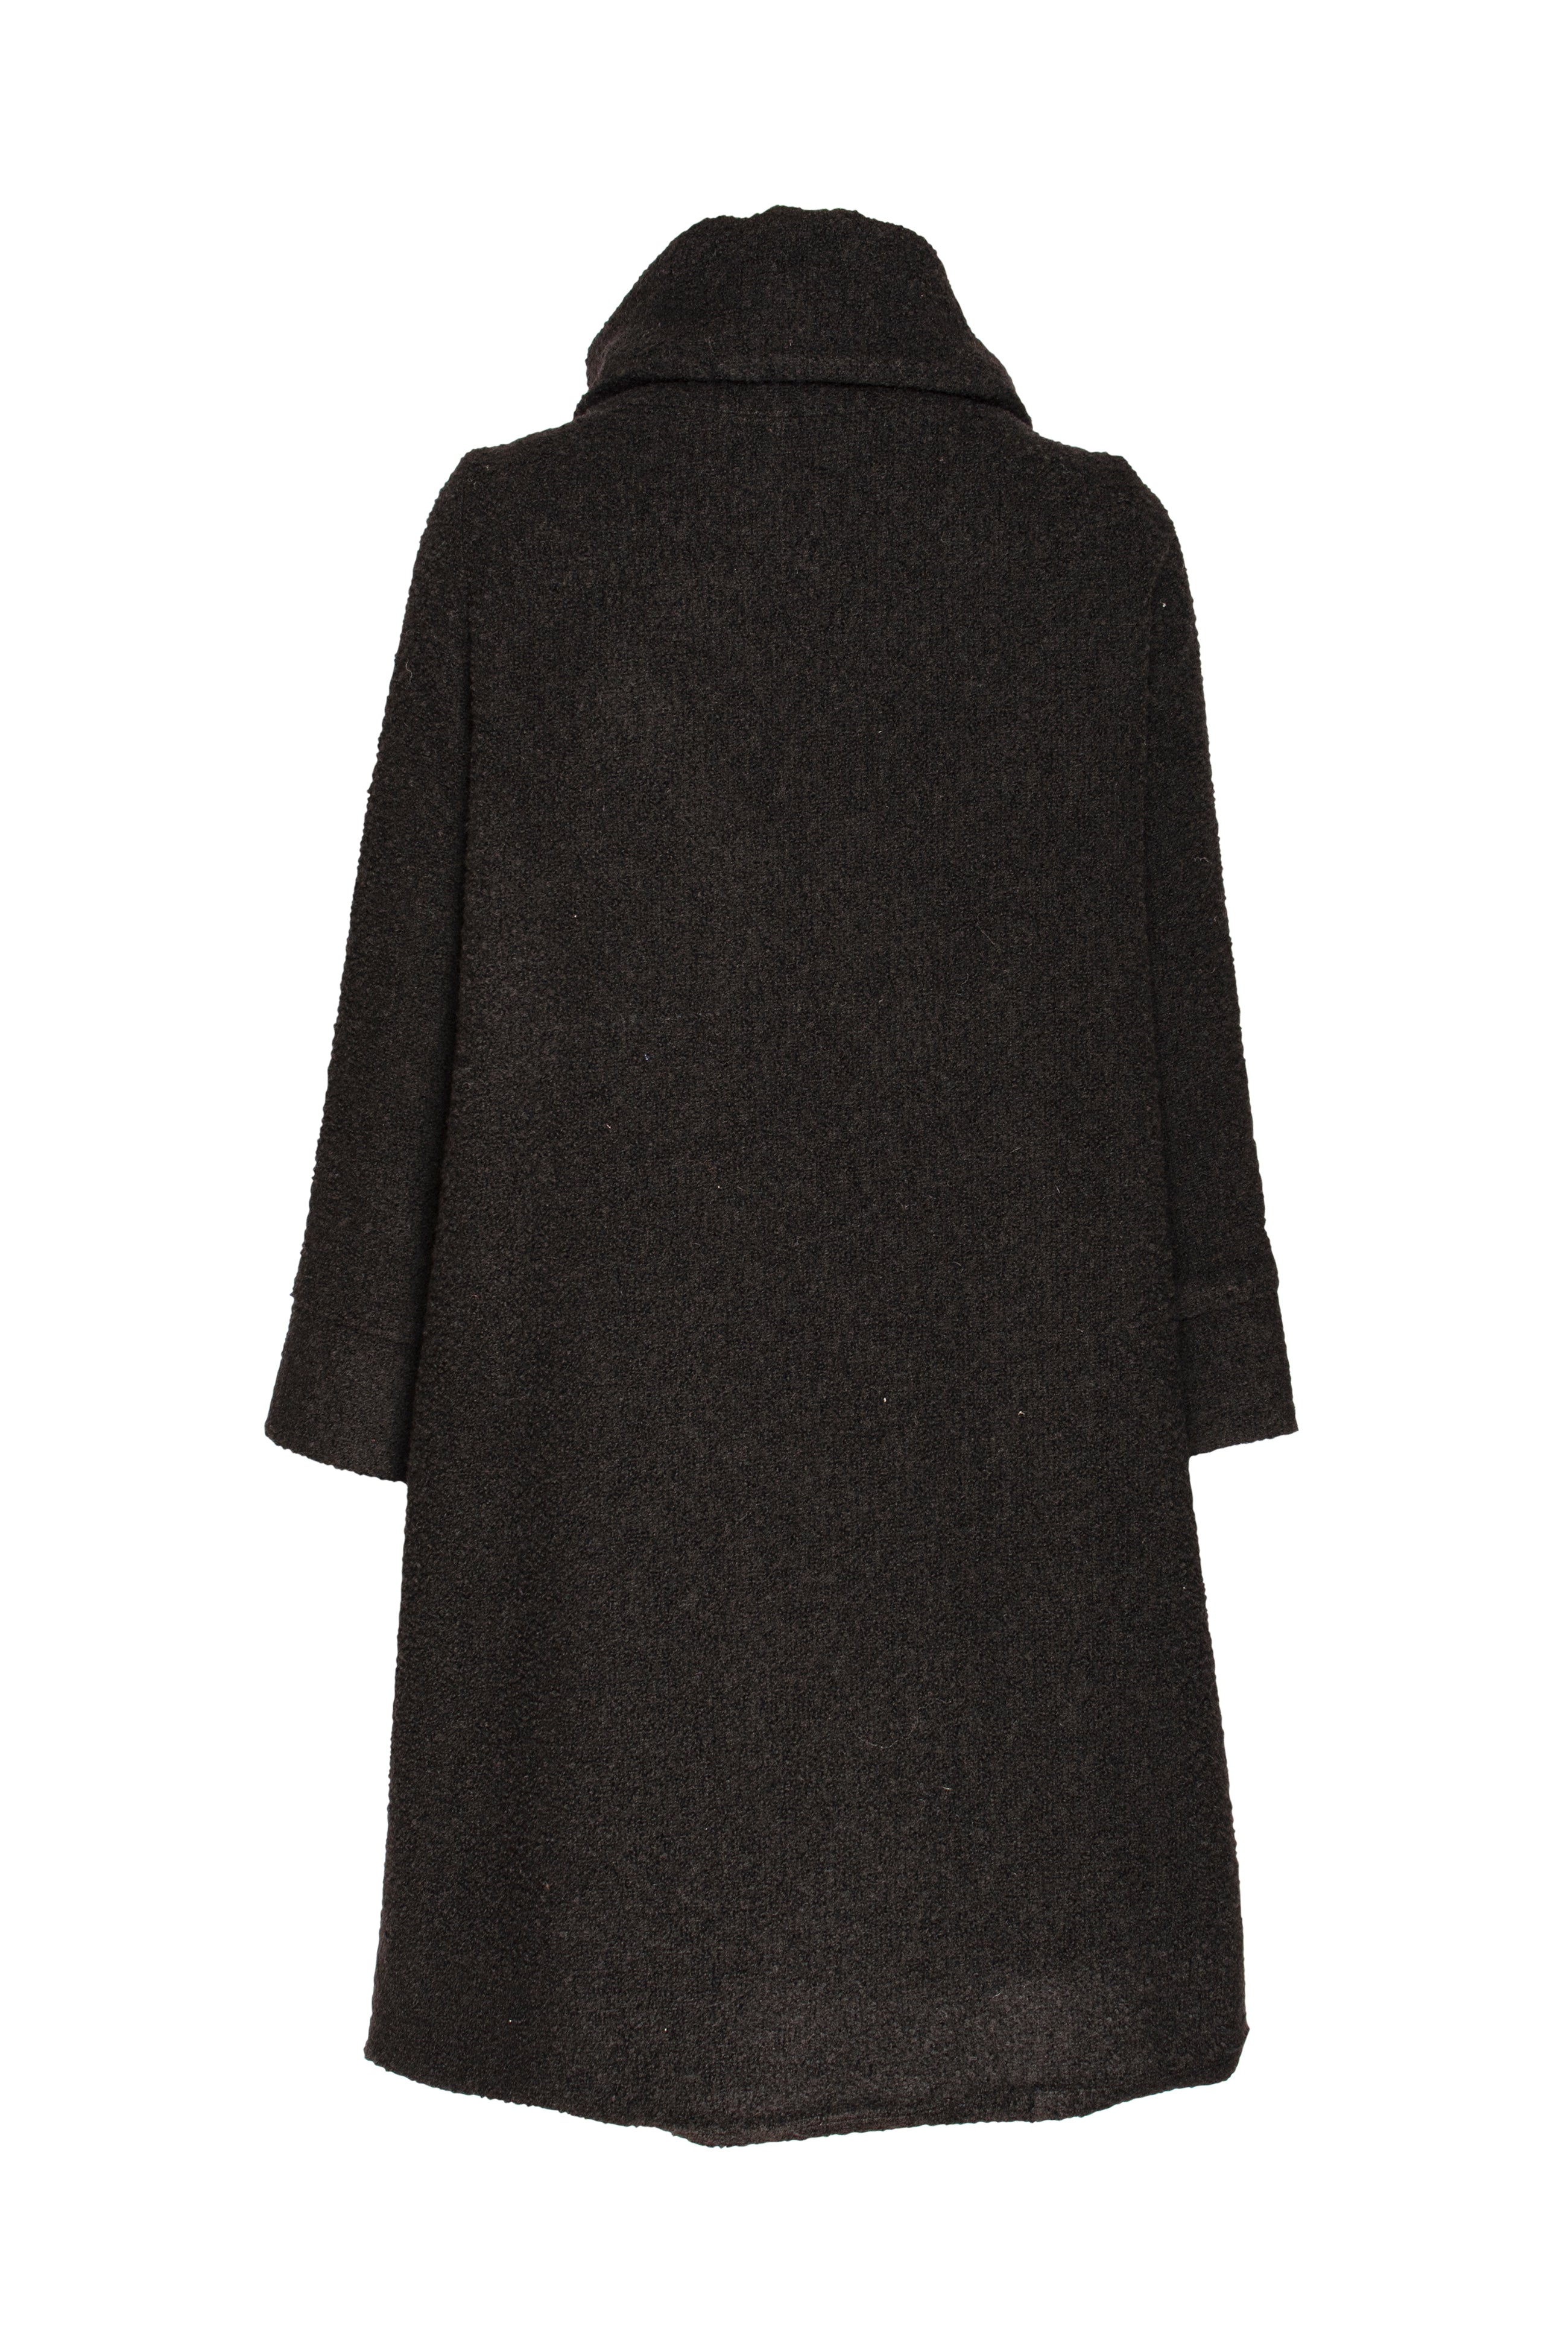 Crossover Collar Coat - Black Texture 5017